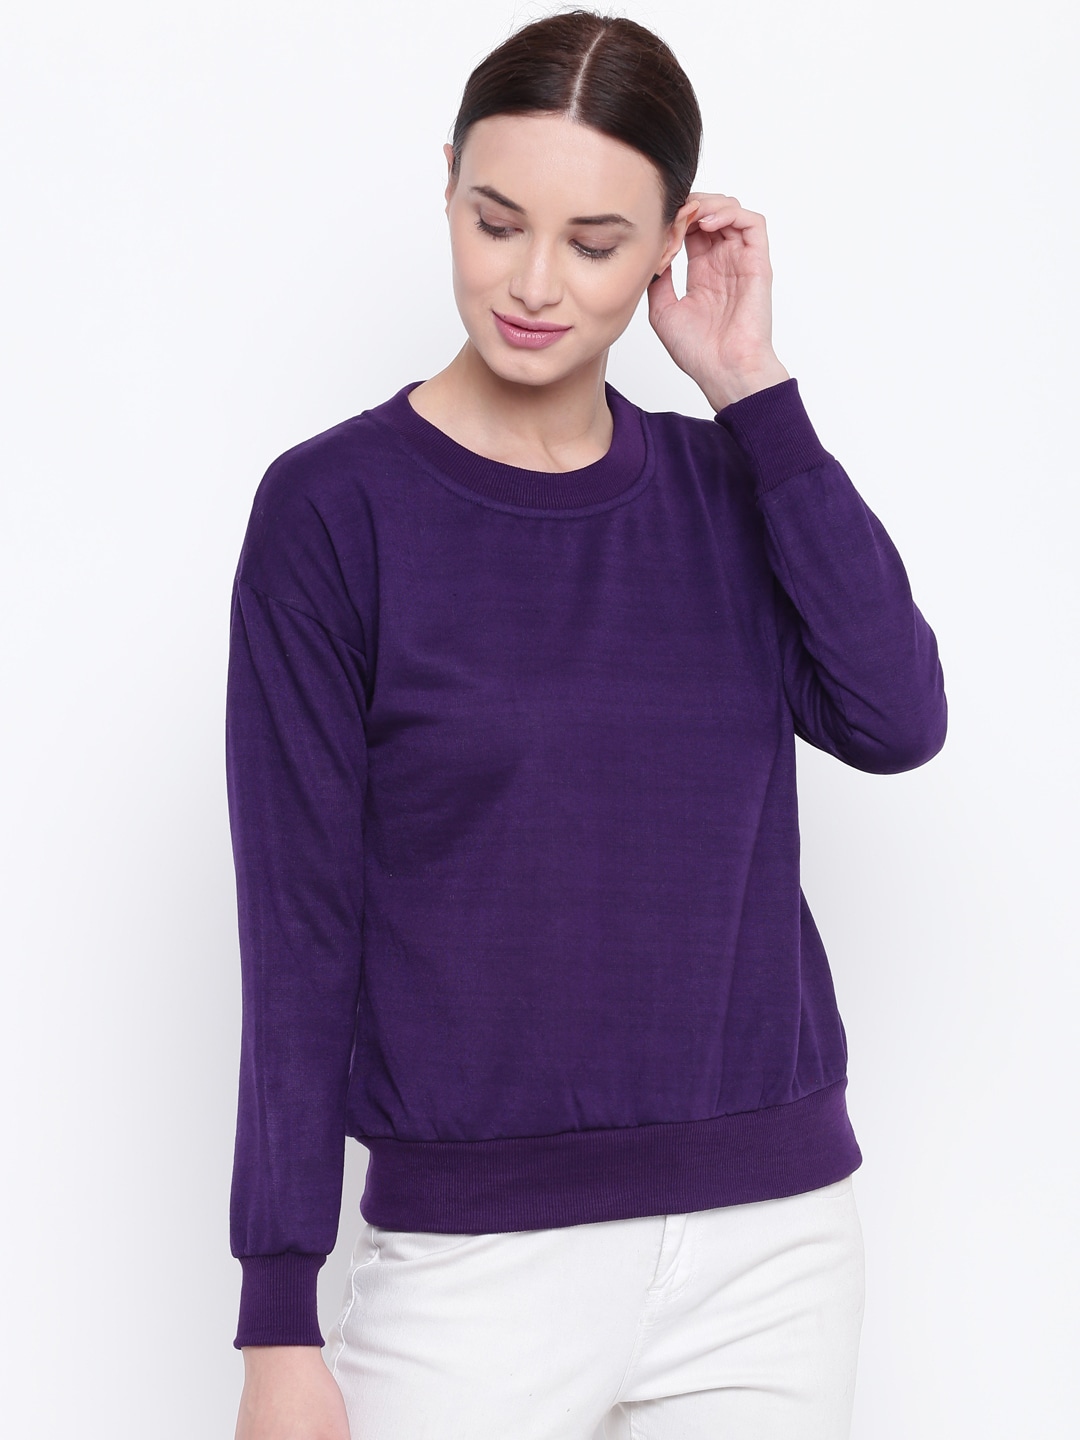 Belle Fille Women Aubergine Solid Sweatshirt Price in India